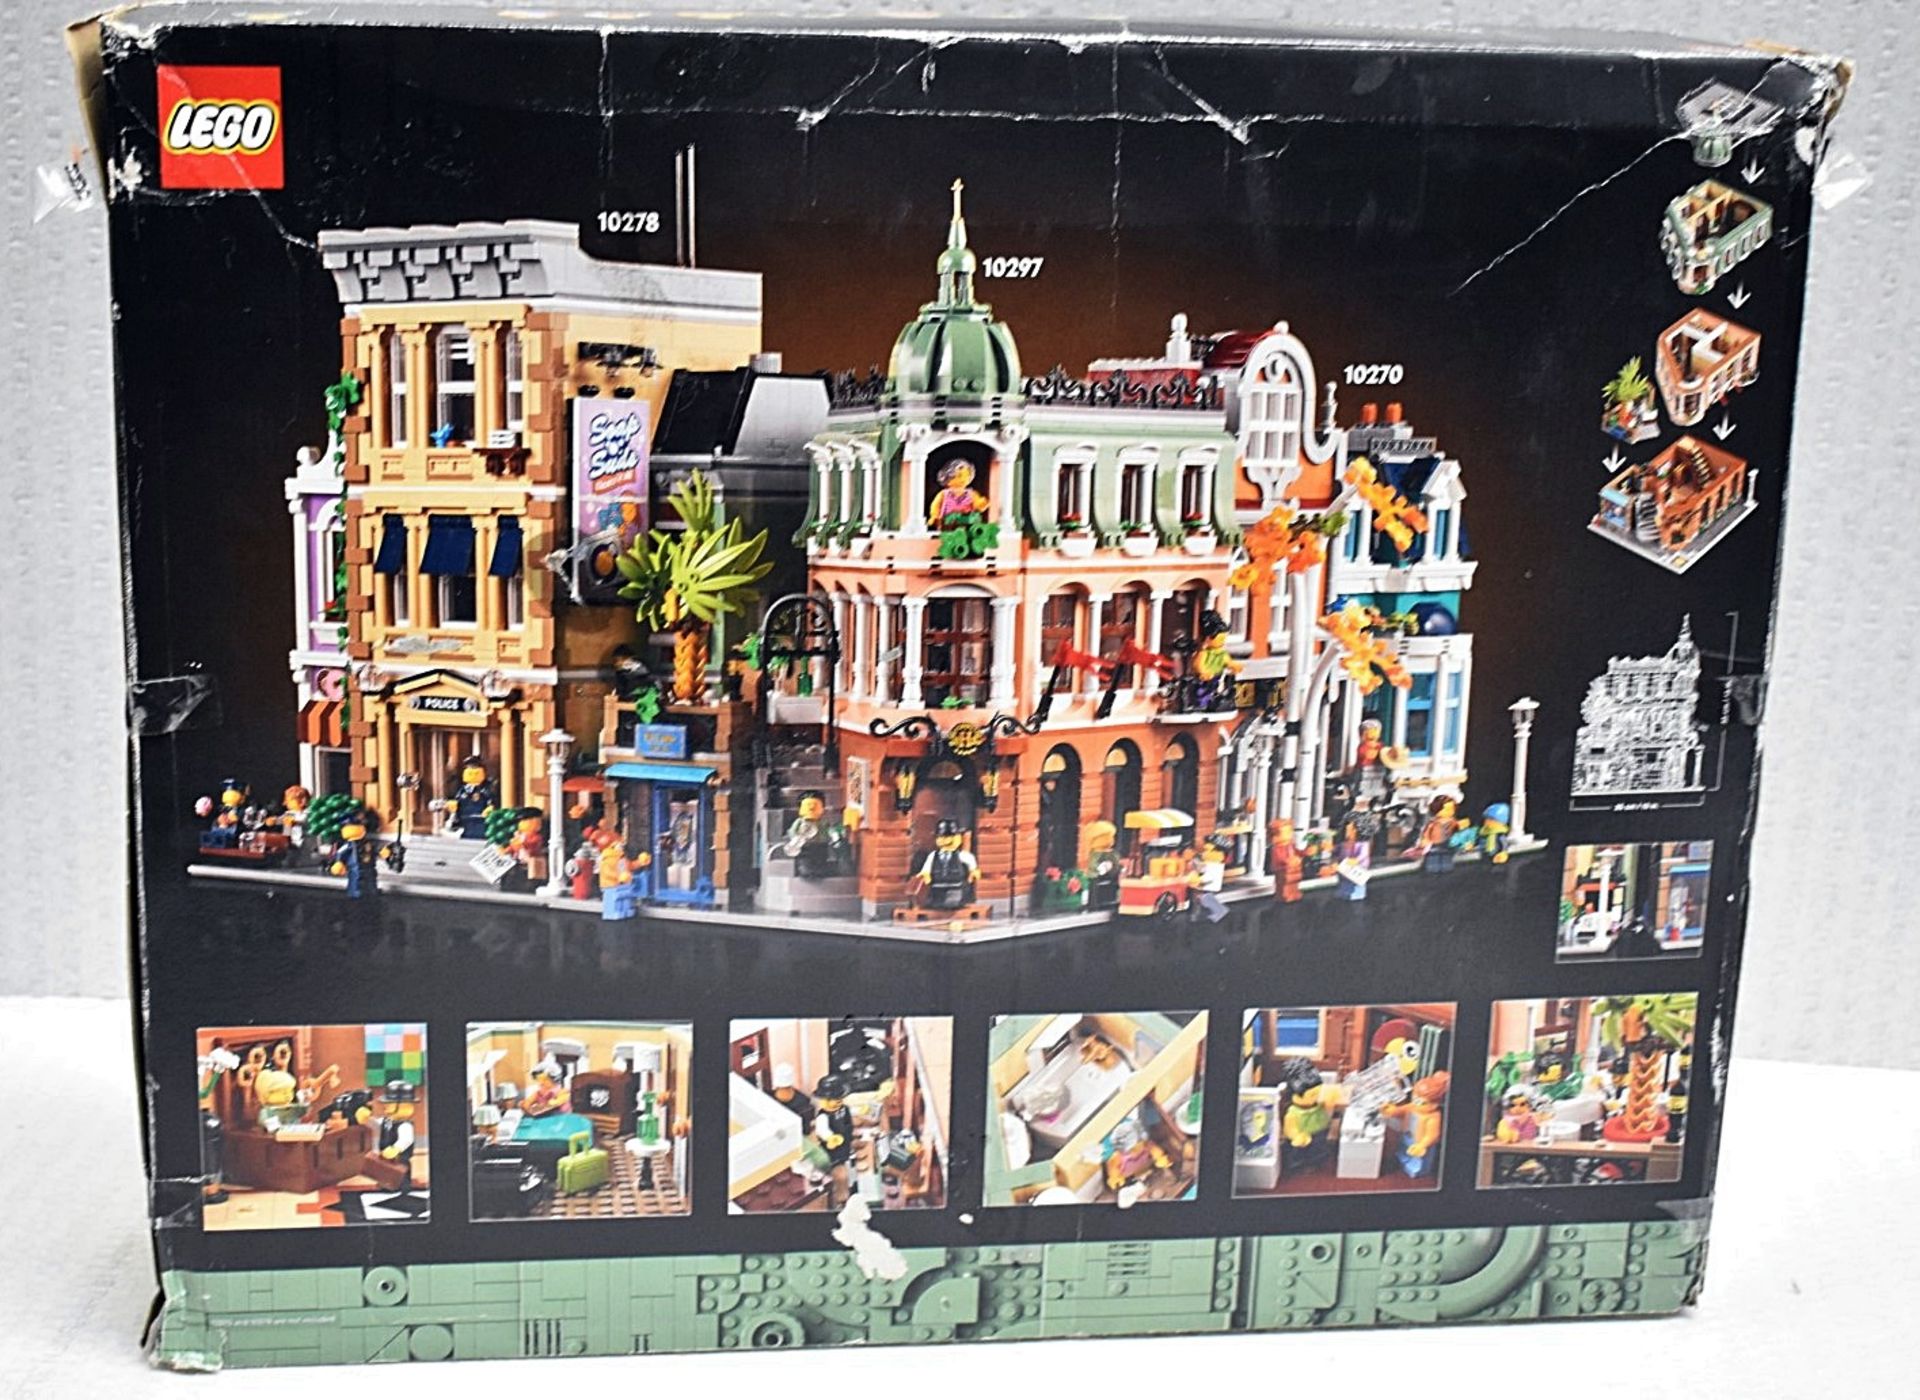 1 x LEGO Boutique Hotel Modular Brick Building Set (10297) - Original Price £199.00 - Boxed Stock - Image 3 of 5